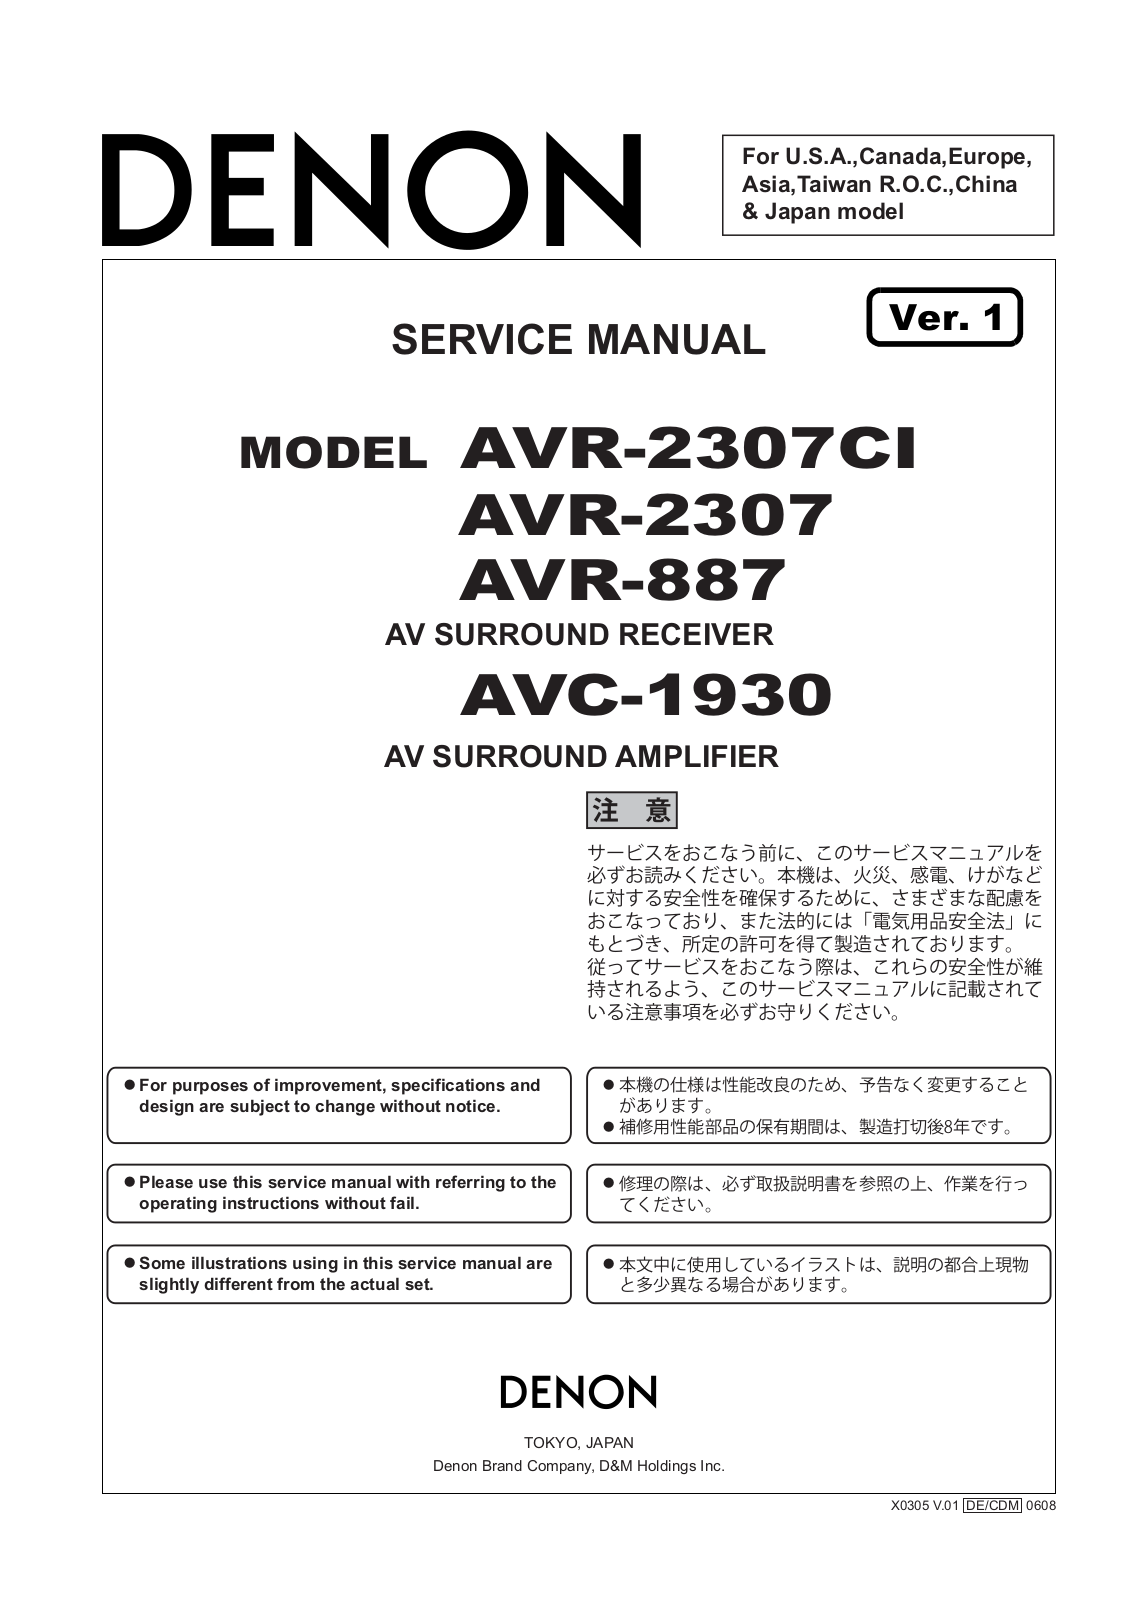 Denon AVR-887, AVR-2307 Schematic